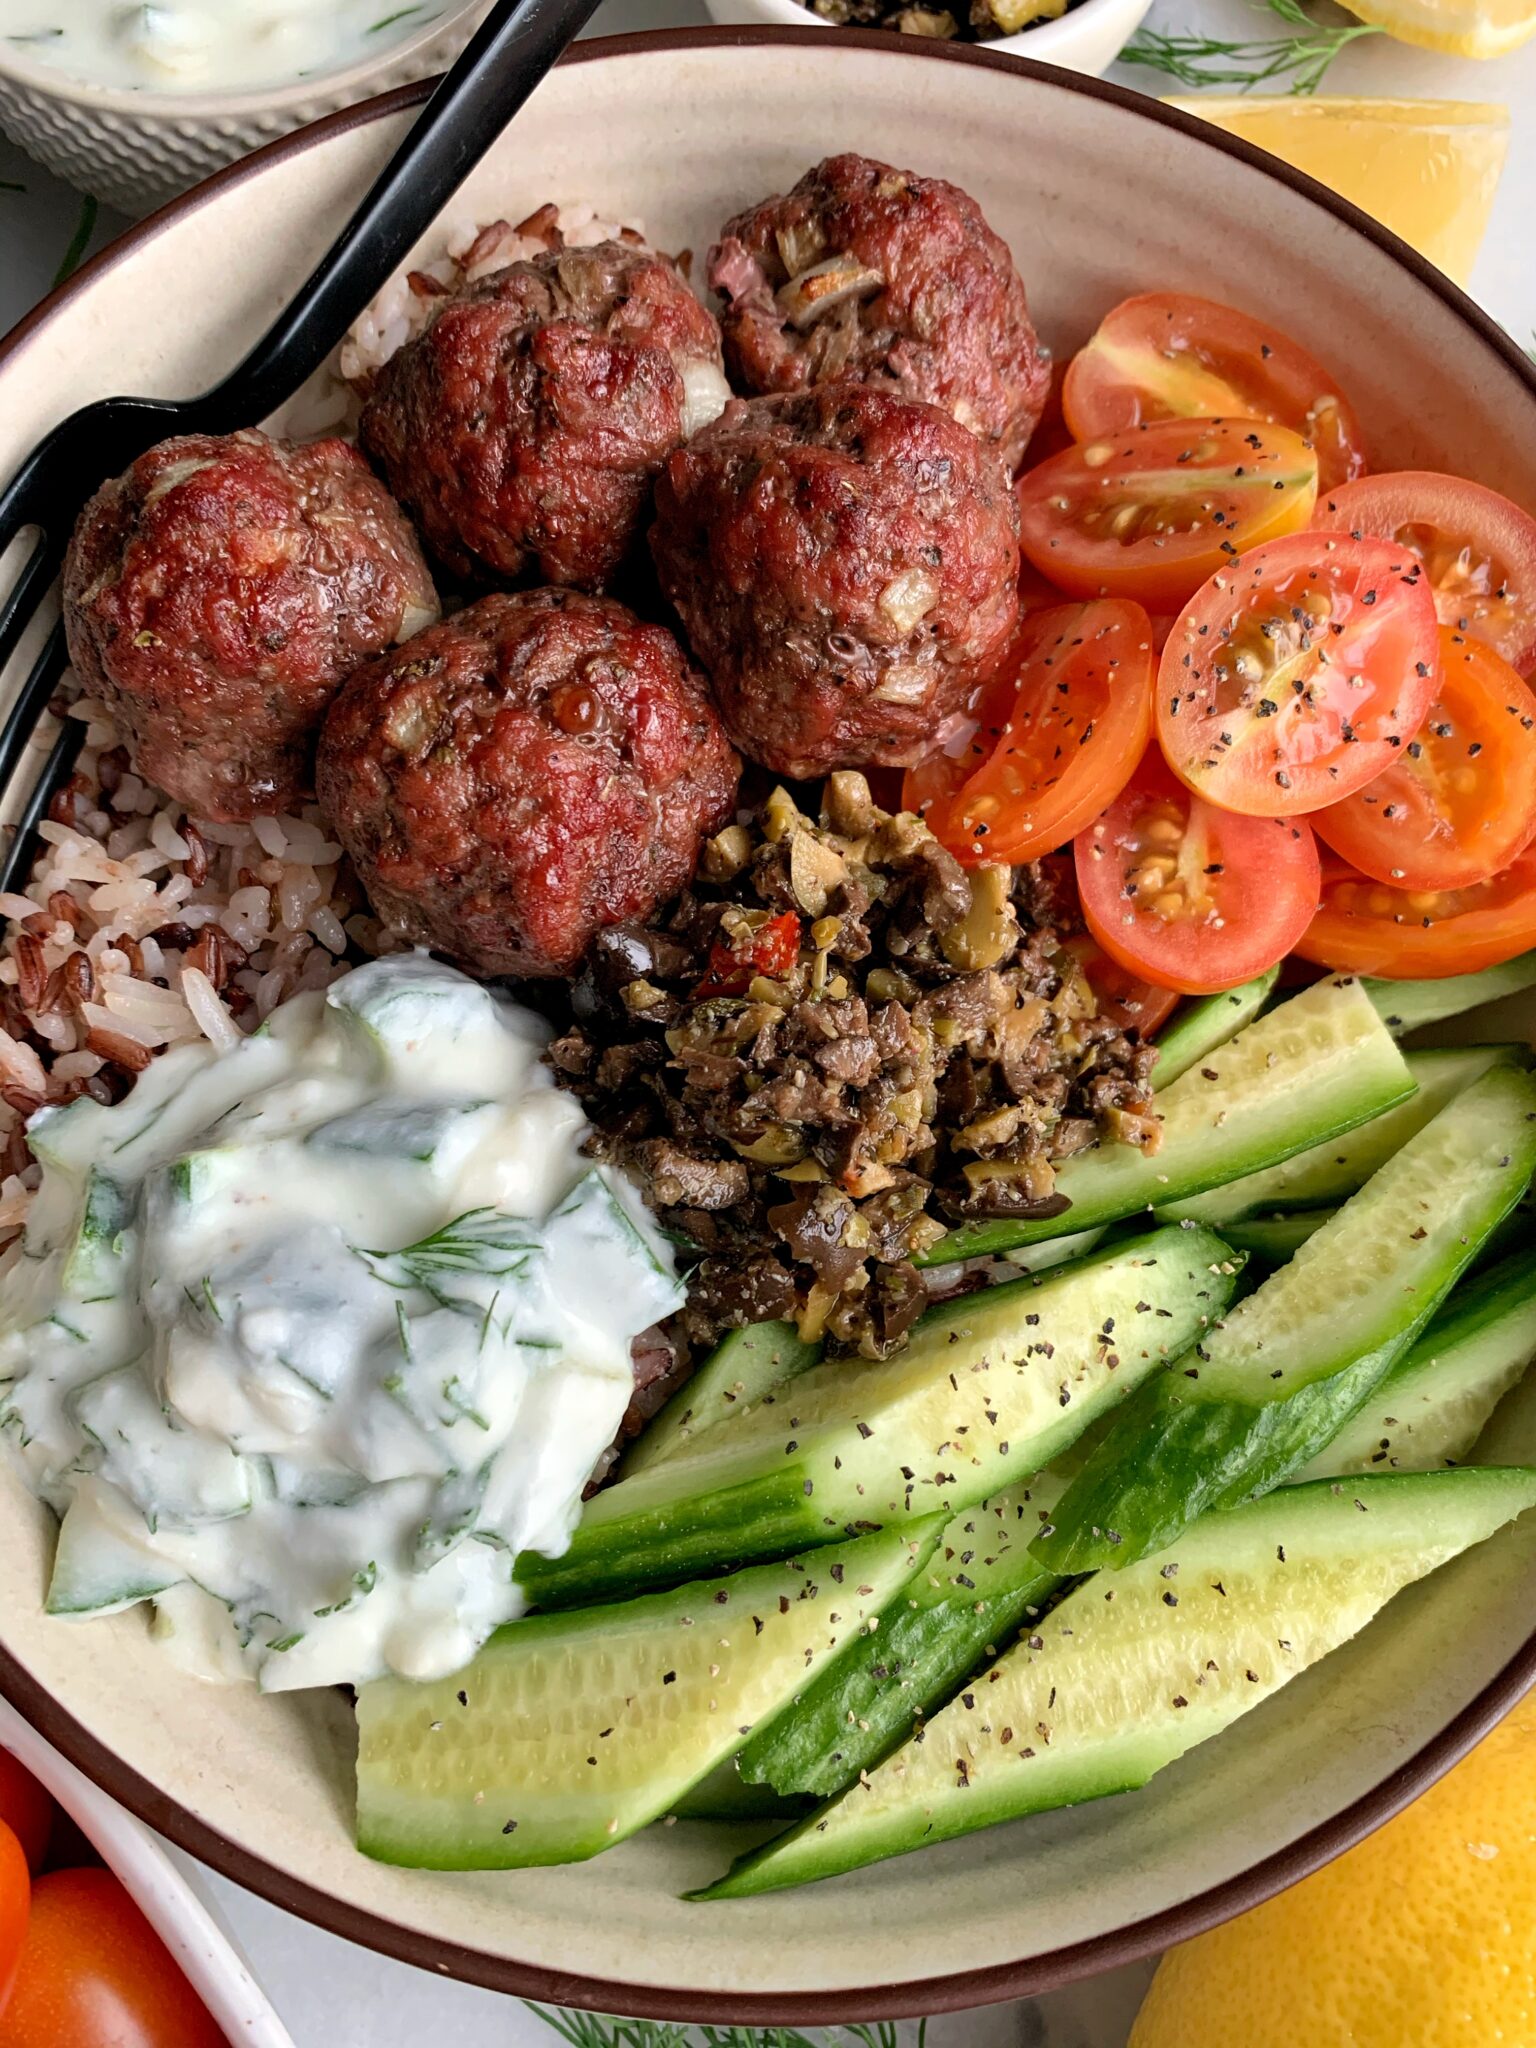 30-minute Healthy Greek Meatballs with Tzatziki Sauce - rachLmansfield